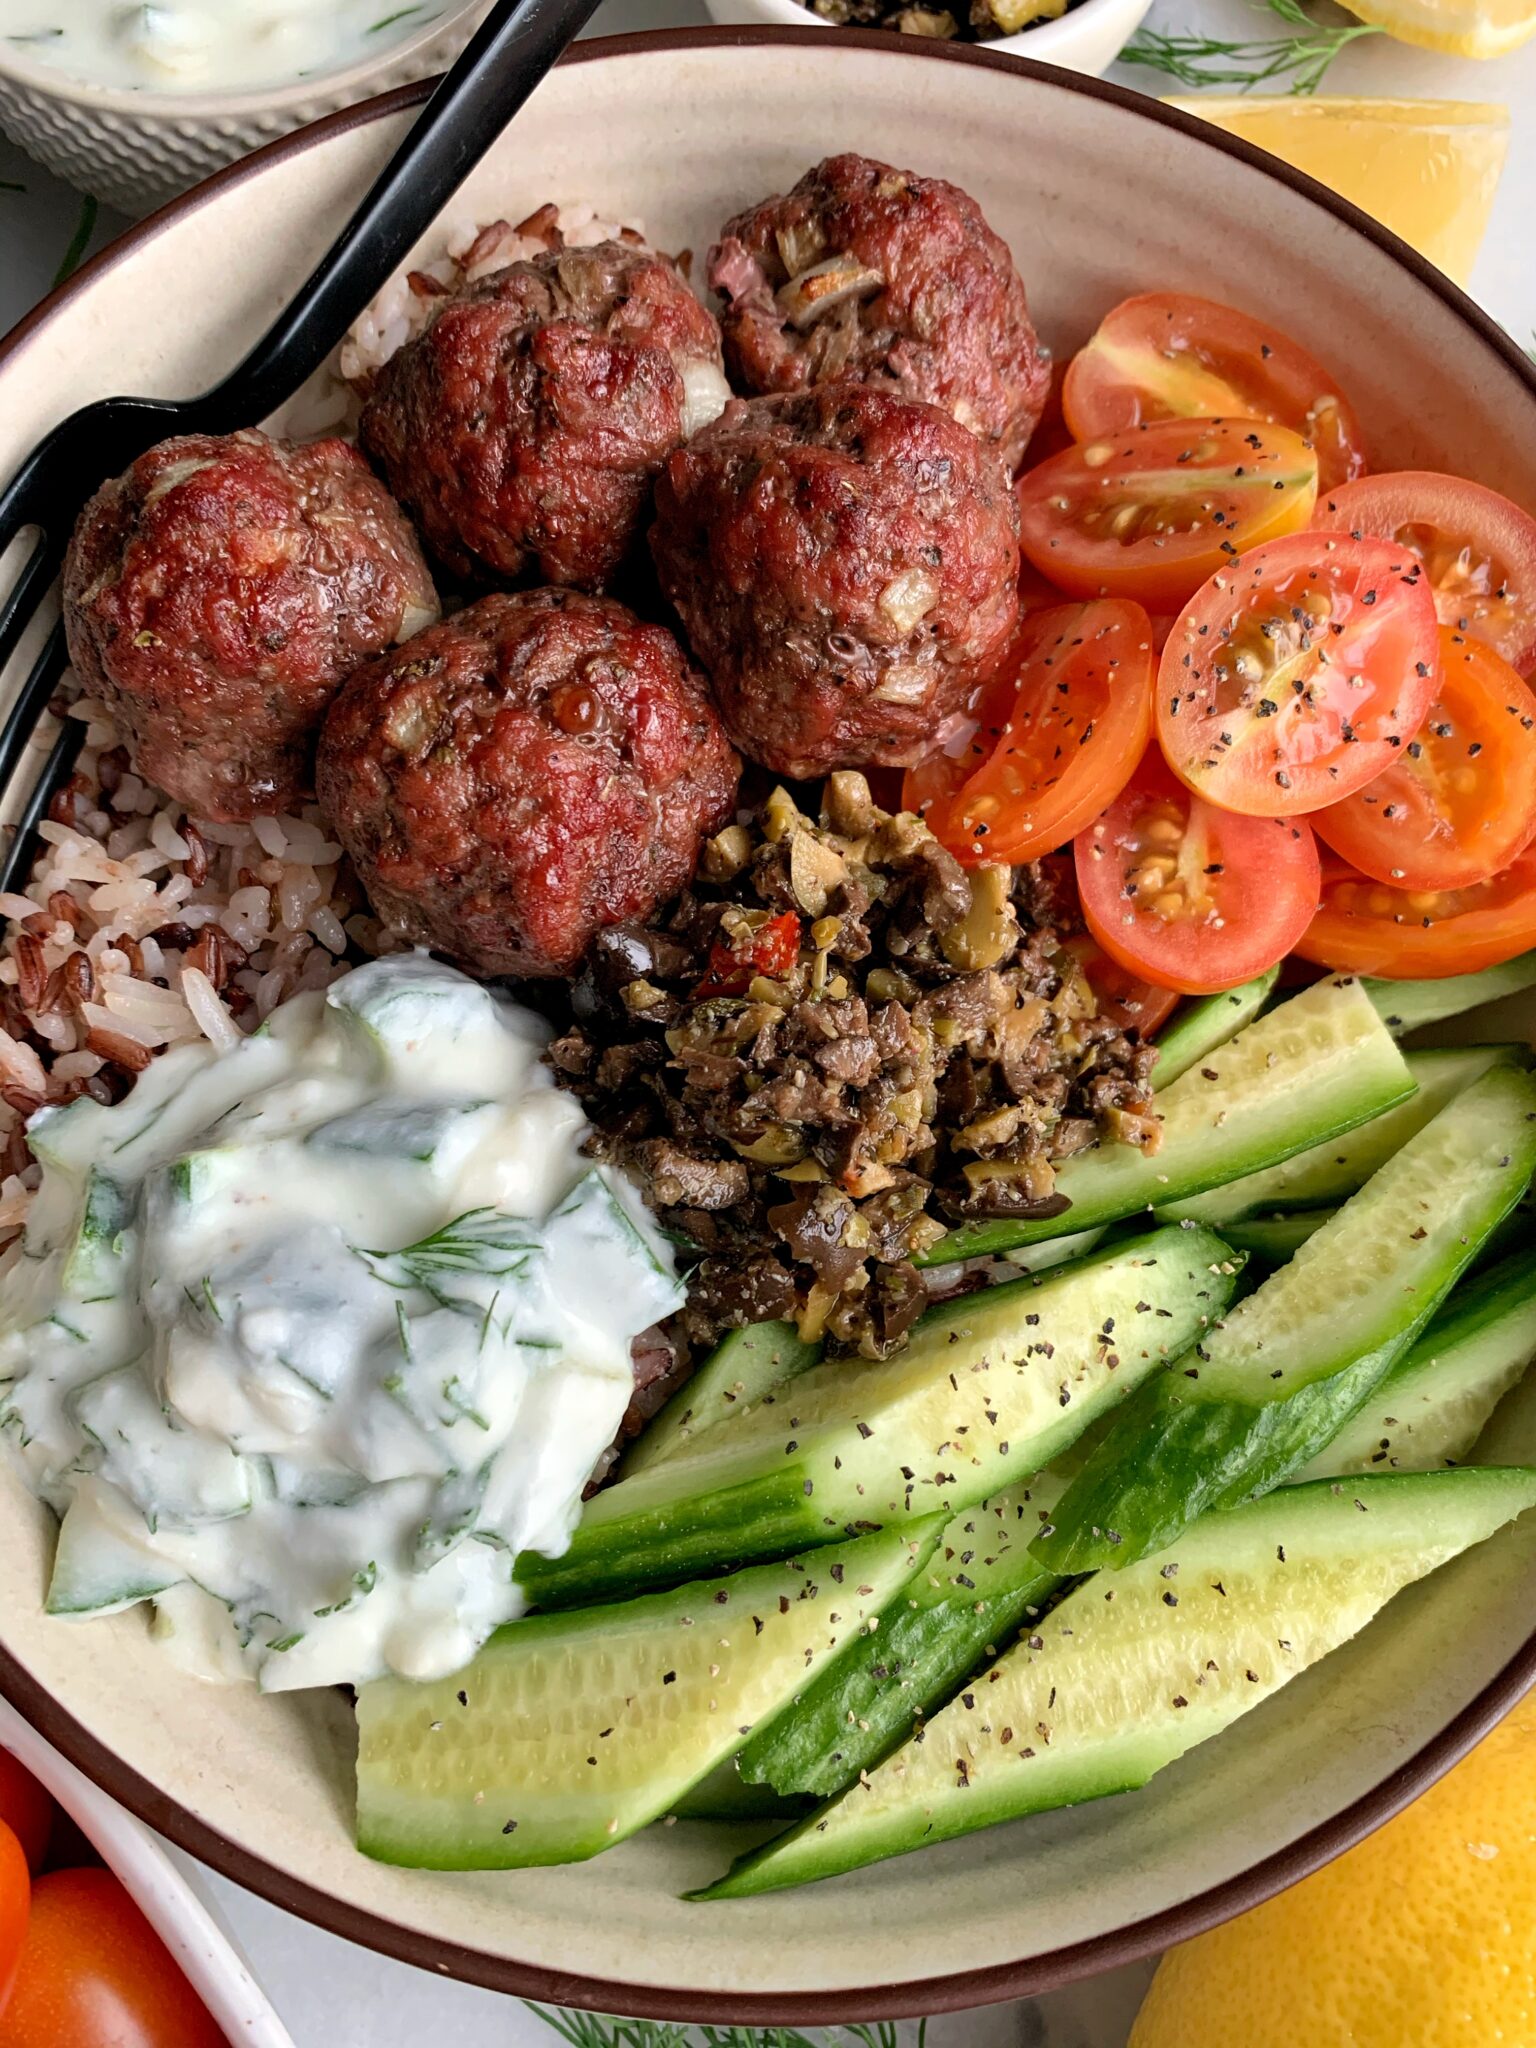 30-minute Healthy Greek Meatballs with Tzatziki Sauce - rachLmansfield